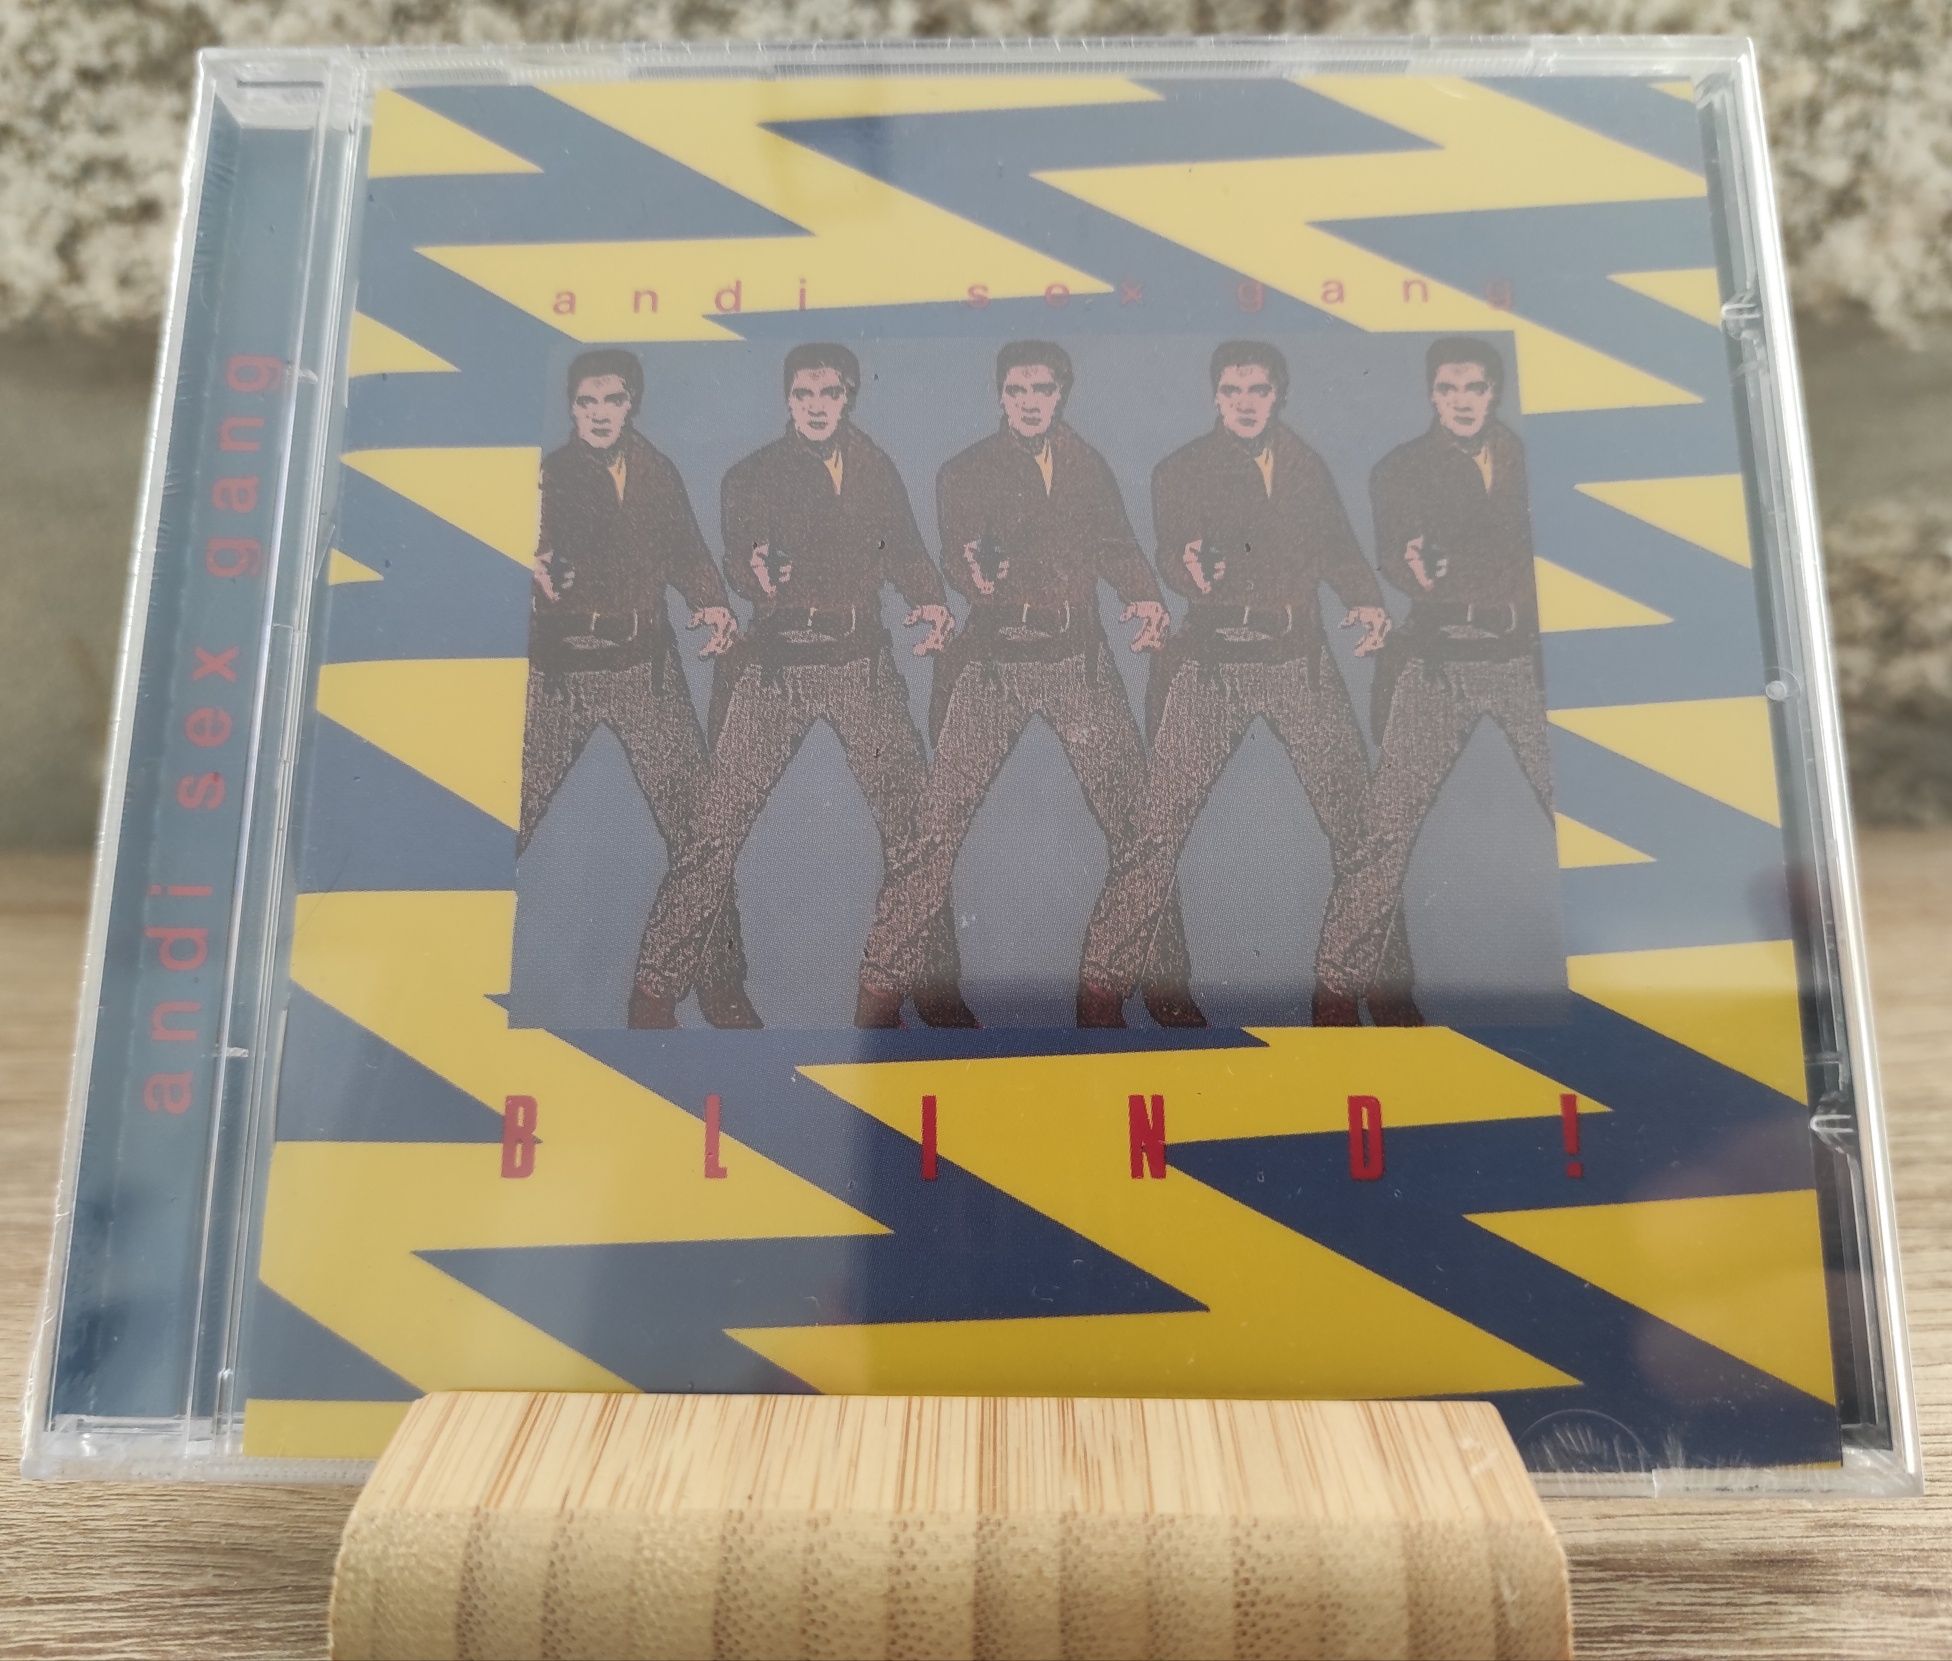 Andi Sex Gang - Blind CD novo